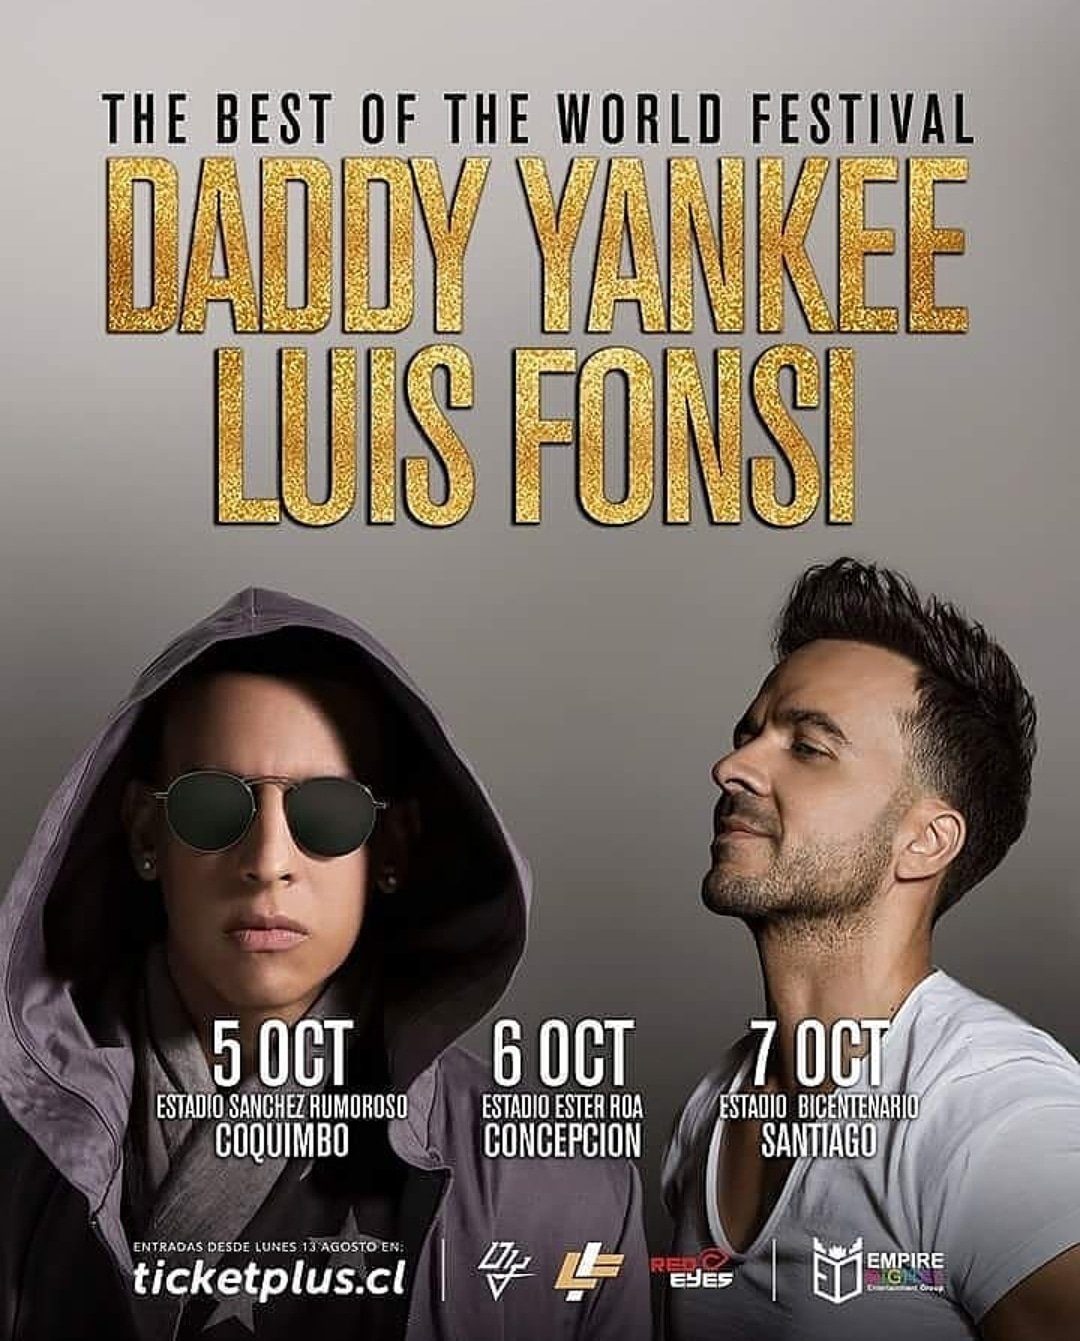 Daddy Yankee y Luis Fonsi se iban a presentar en Chile